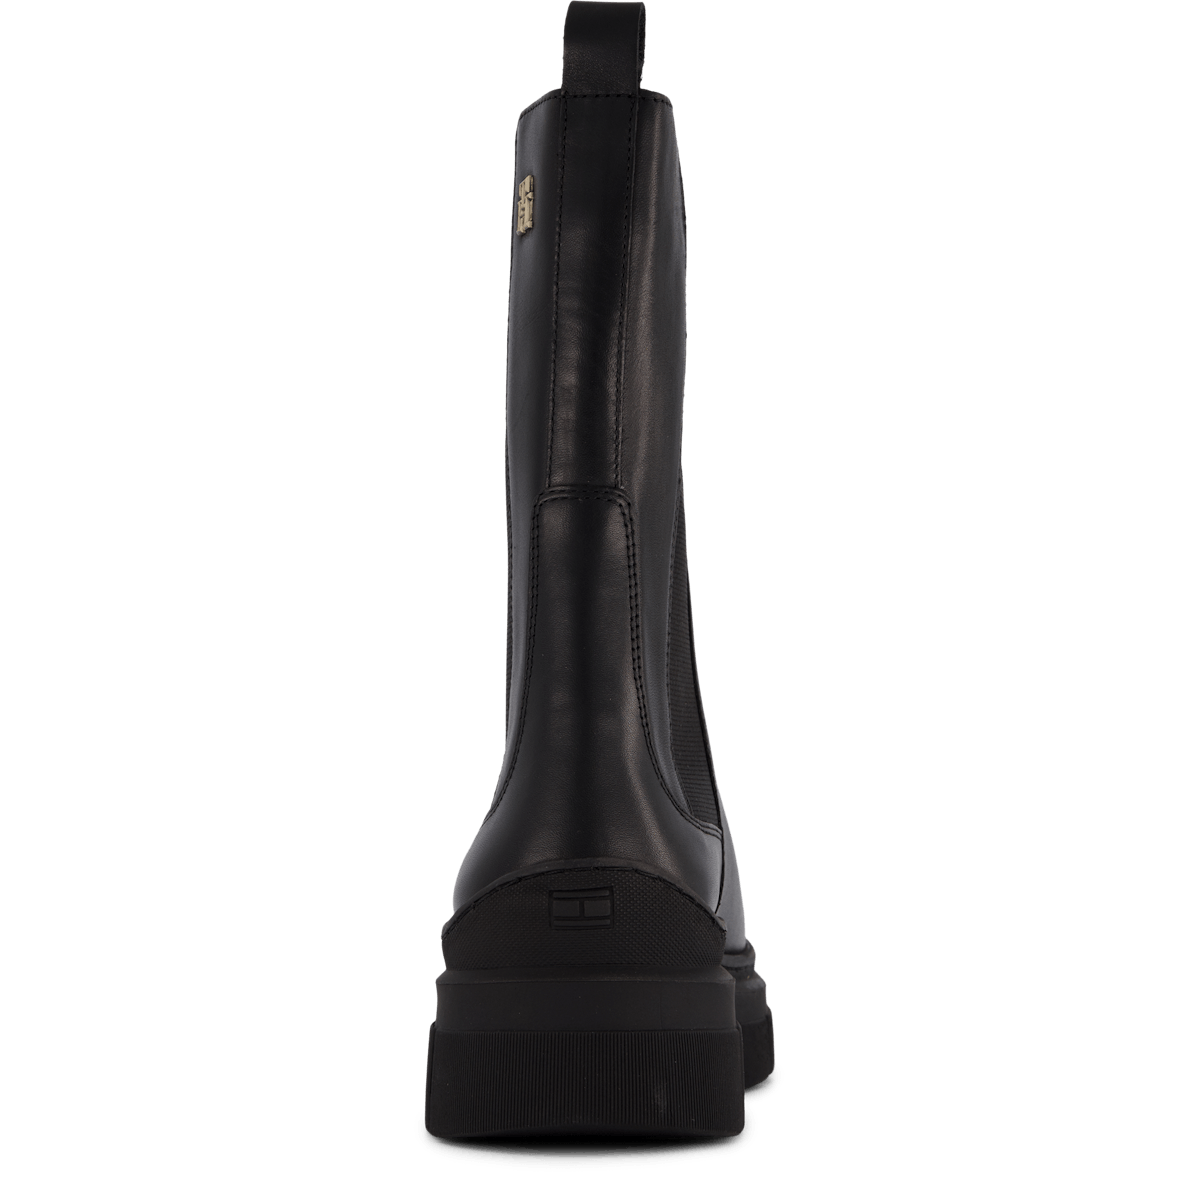 Essential Leather Chelsea Boot Black | Skor för alla tillfällen | Footway